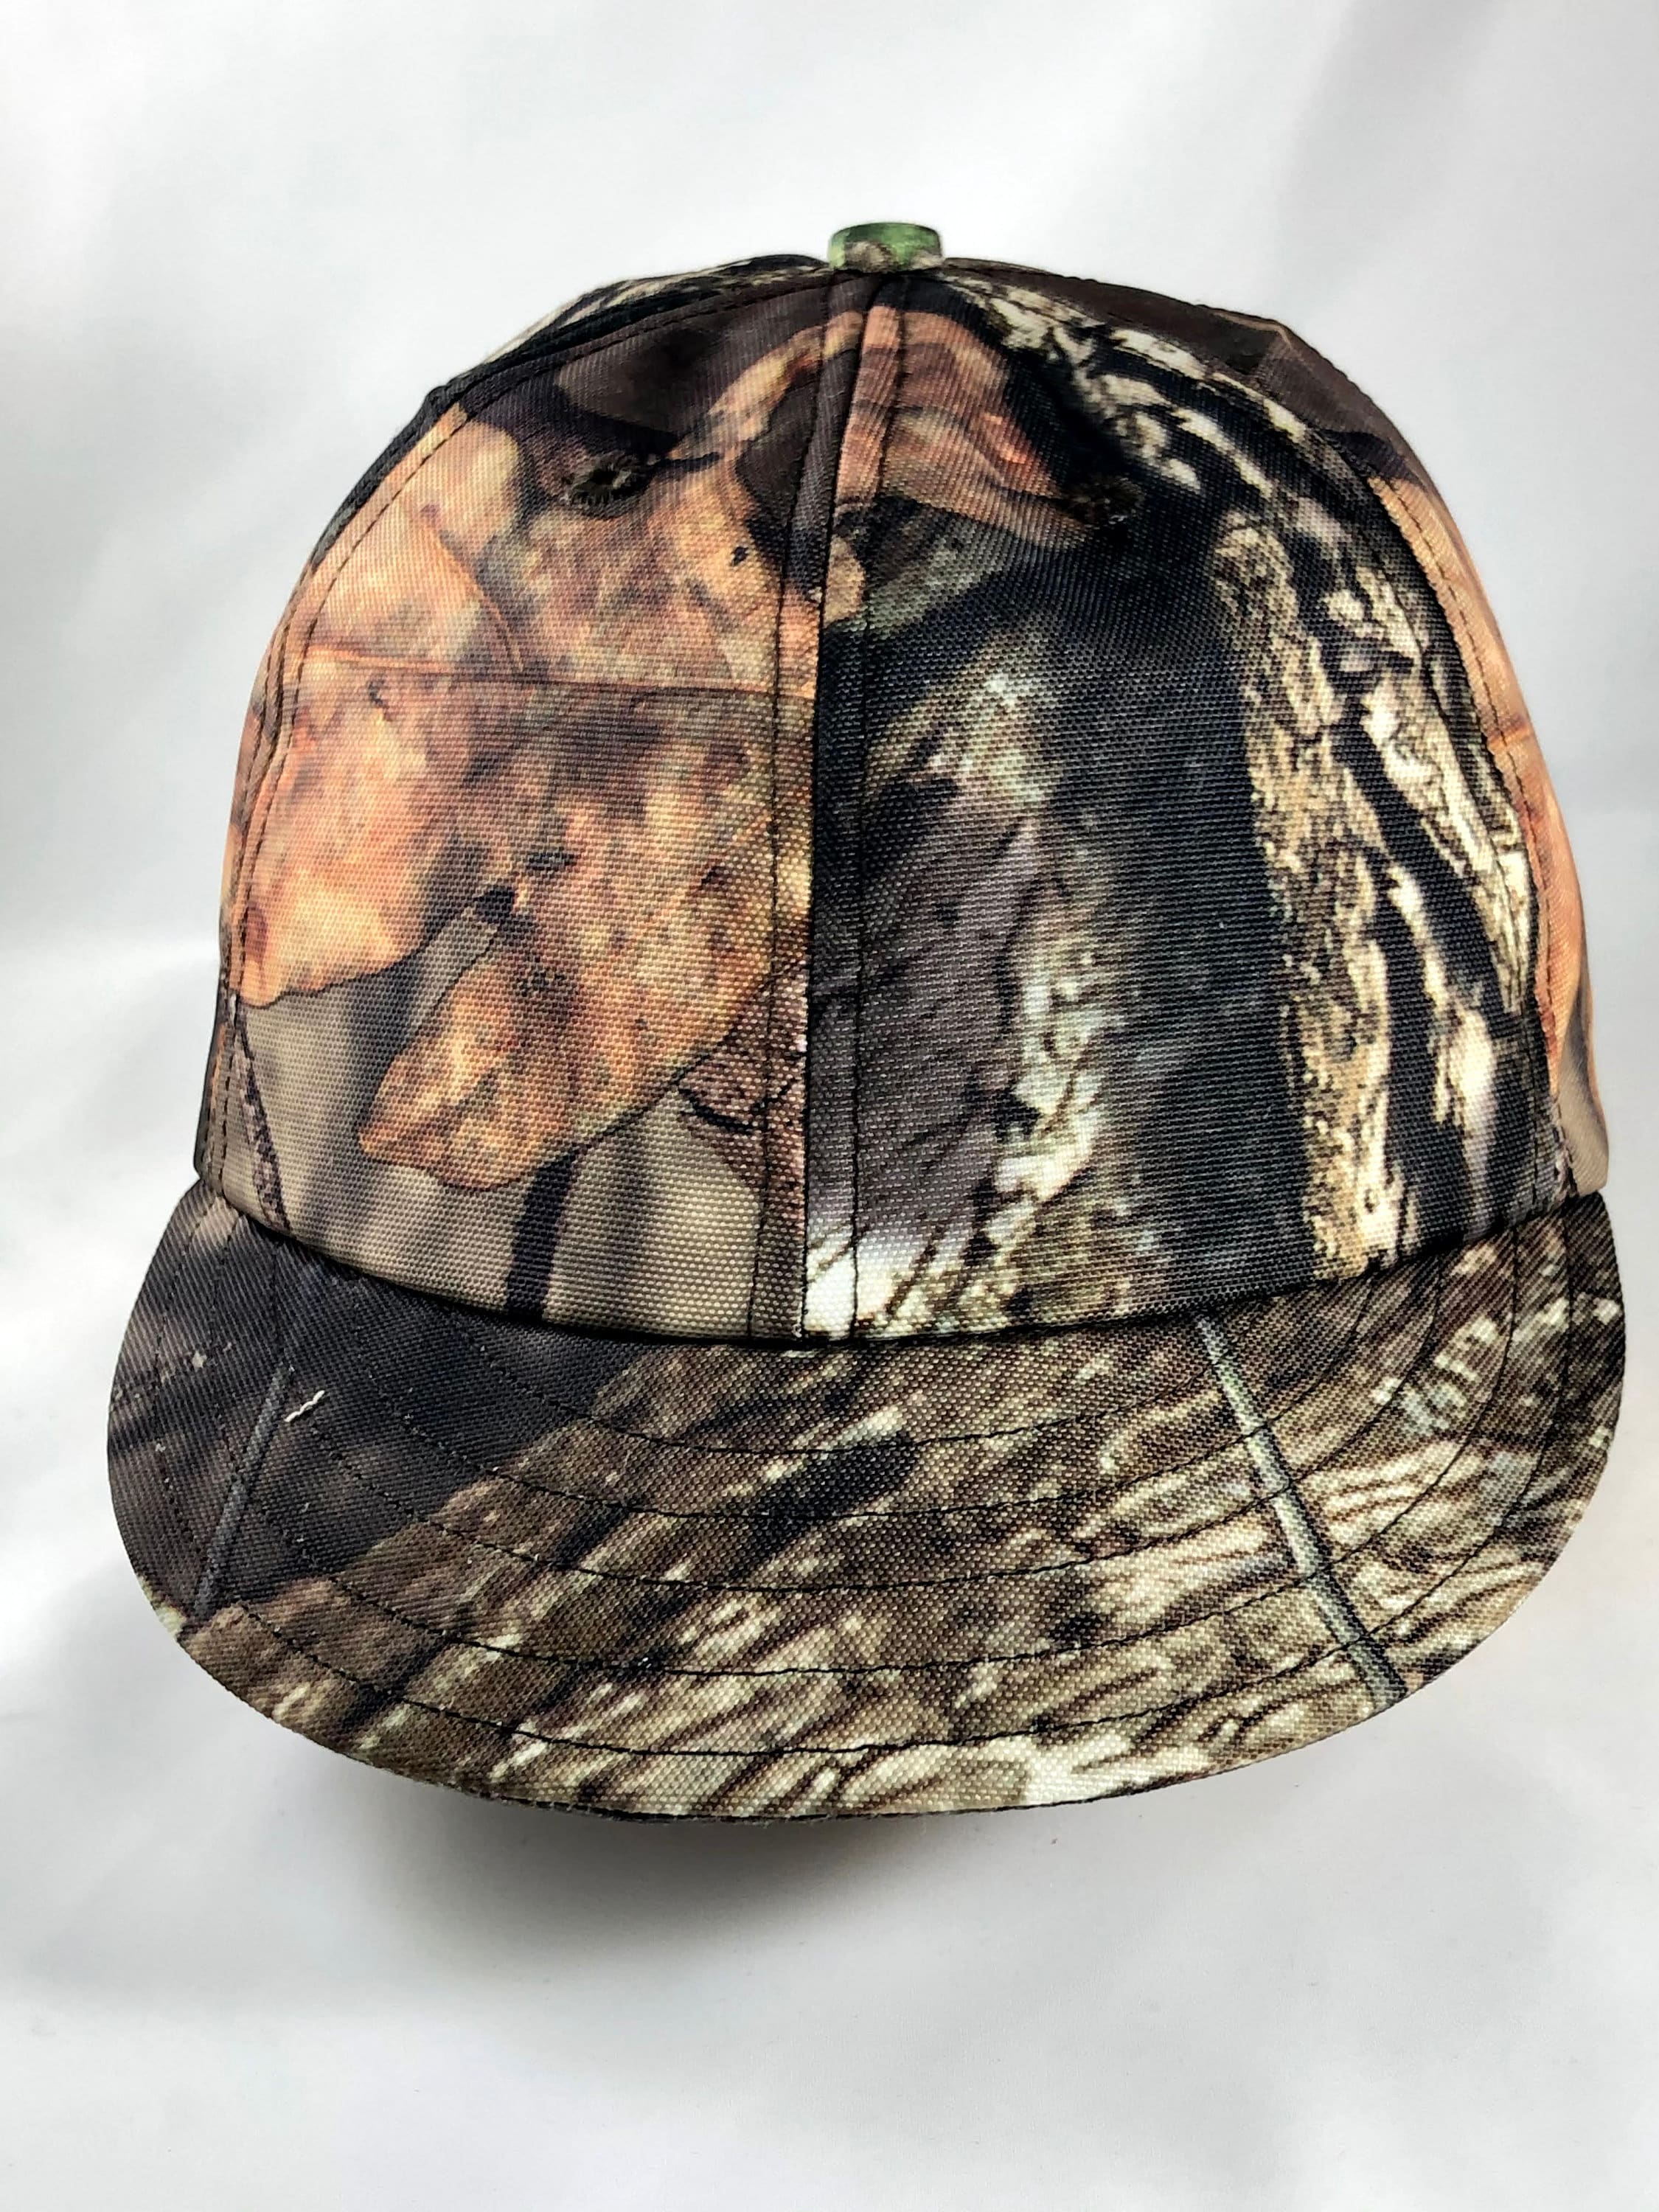 Archer / Bowhunter short visor camo cap. Water resistant | Etsy